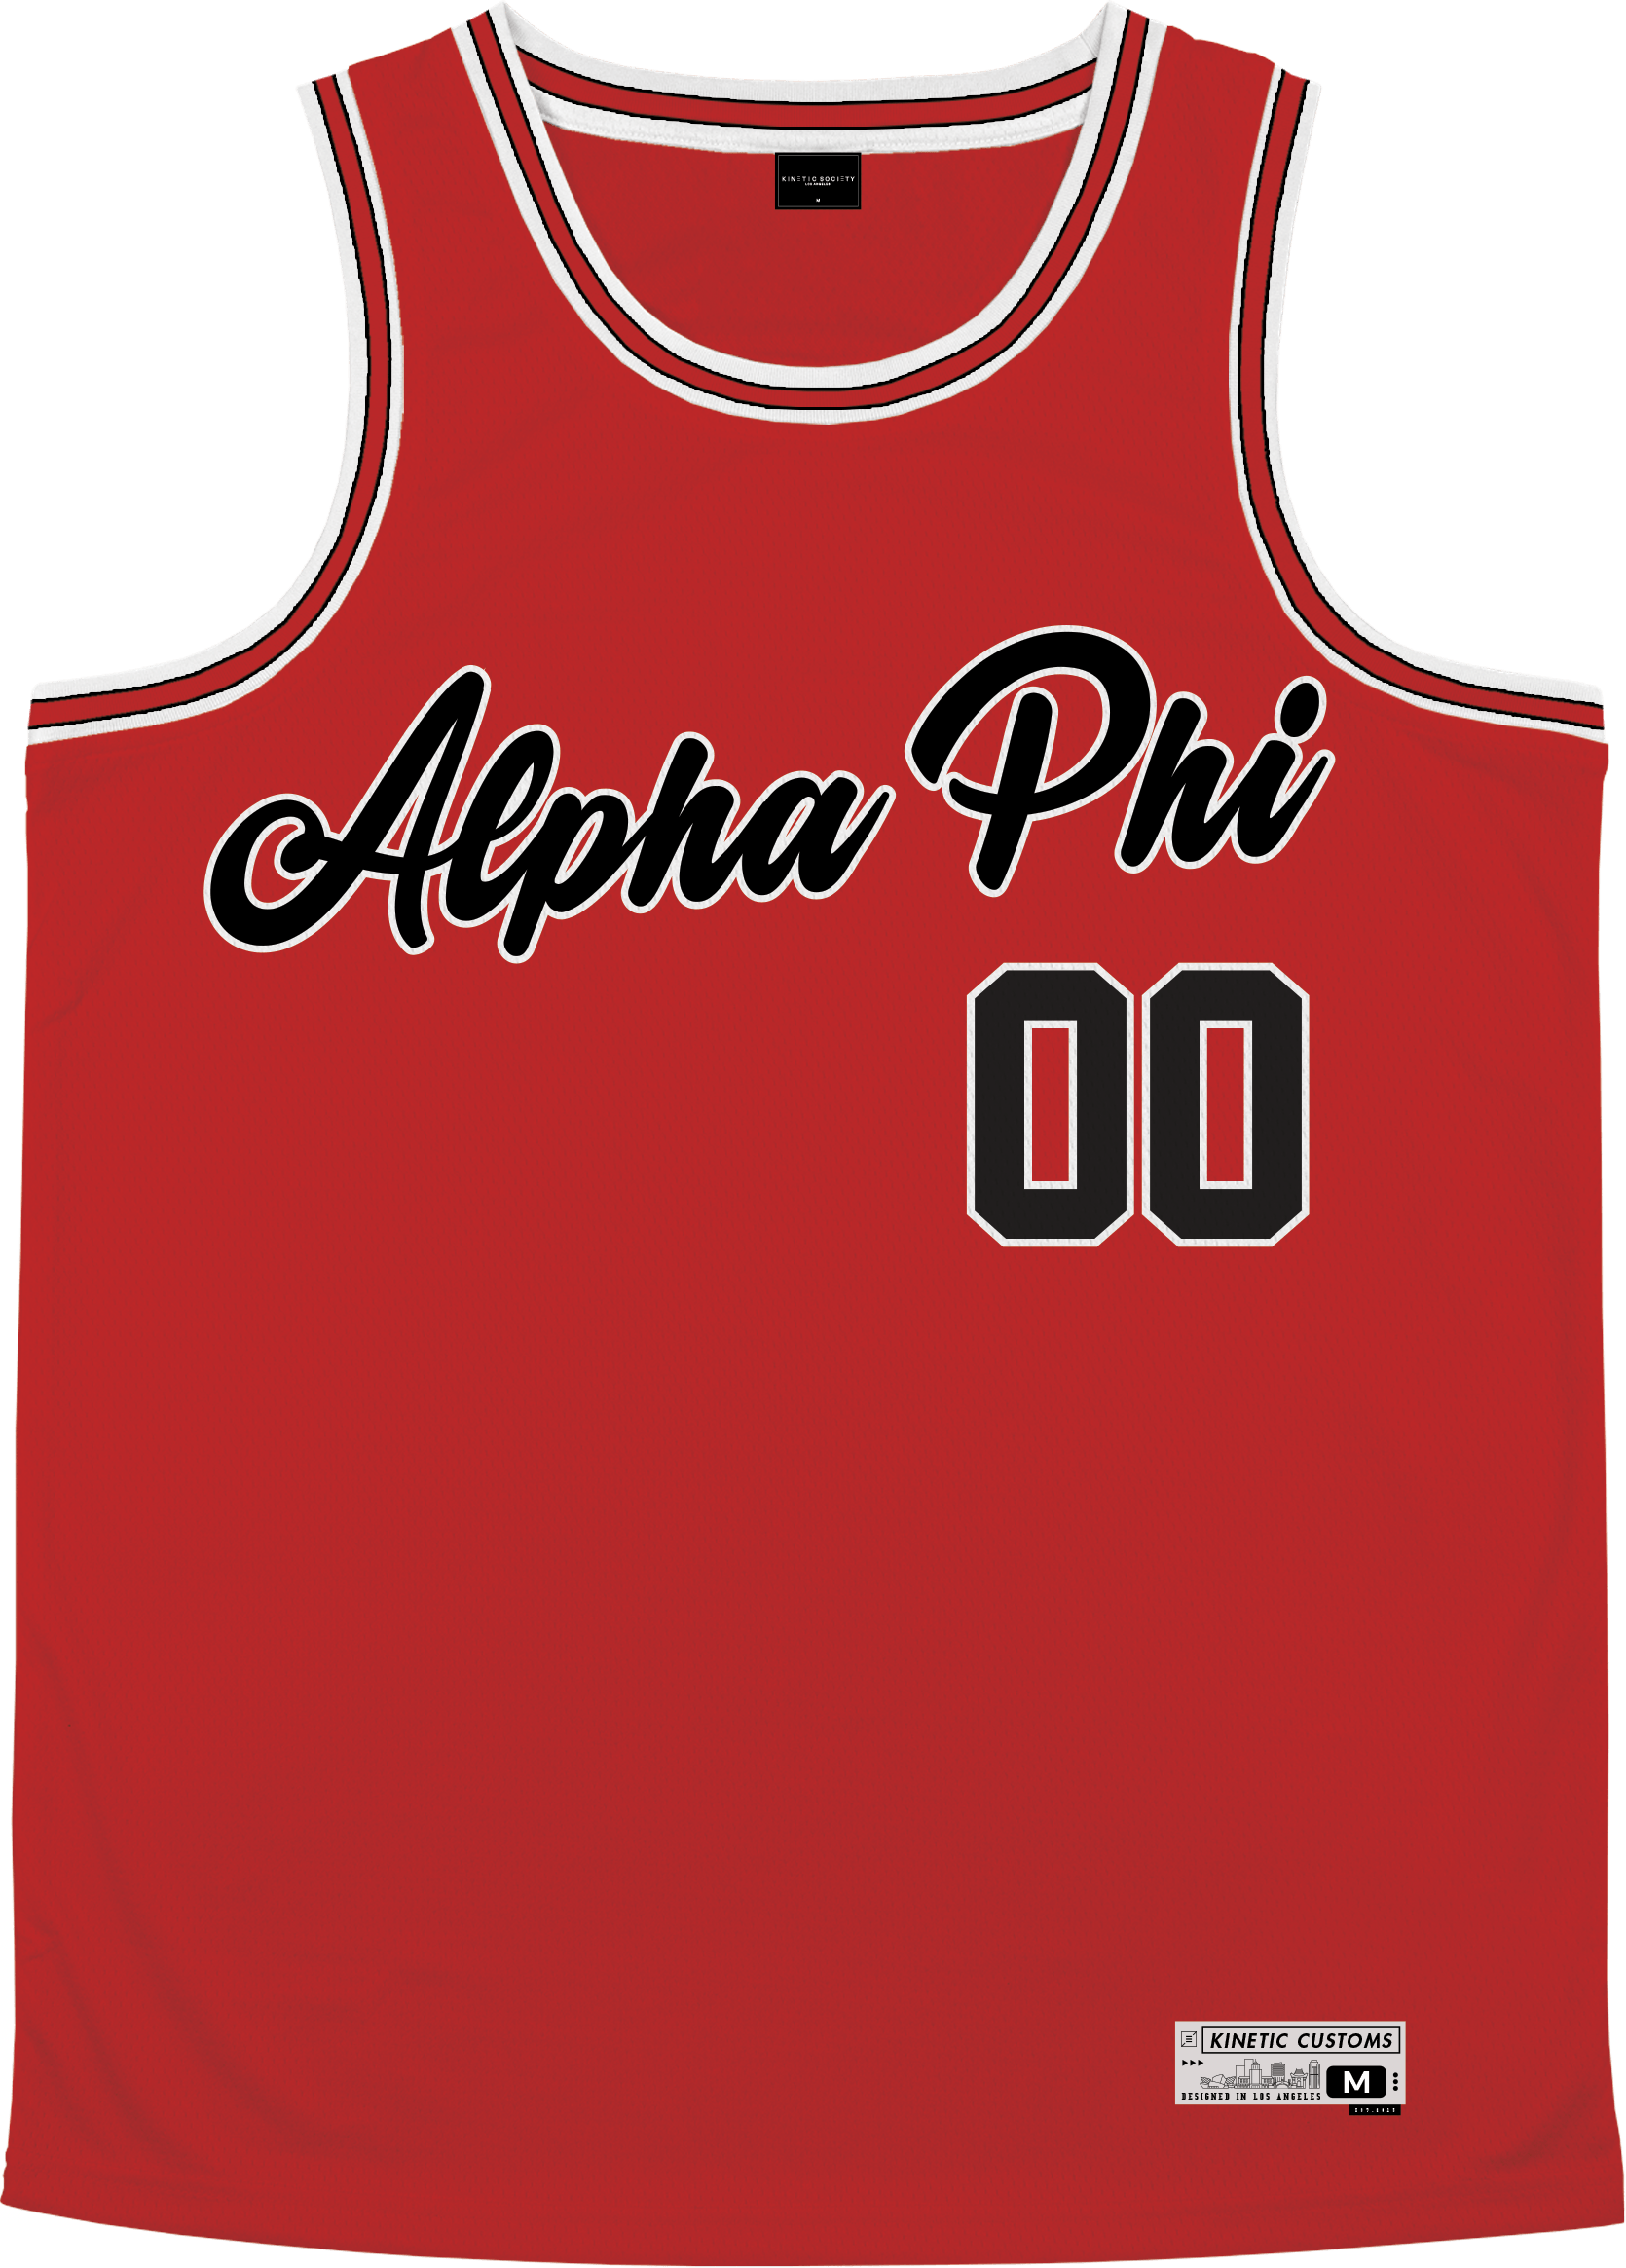 Alpha Phi - Big Red Basketball Jersey - Kinetic Society